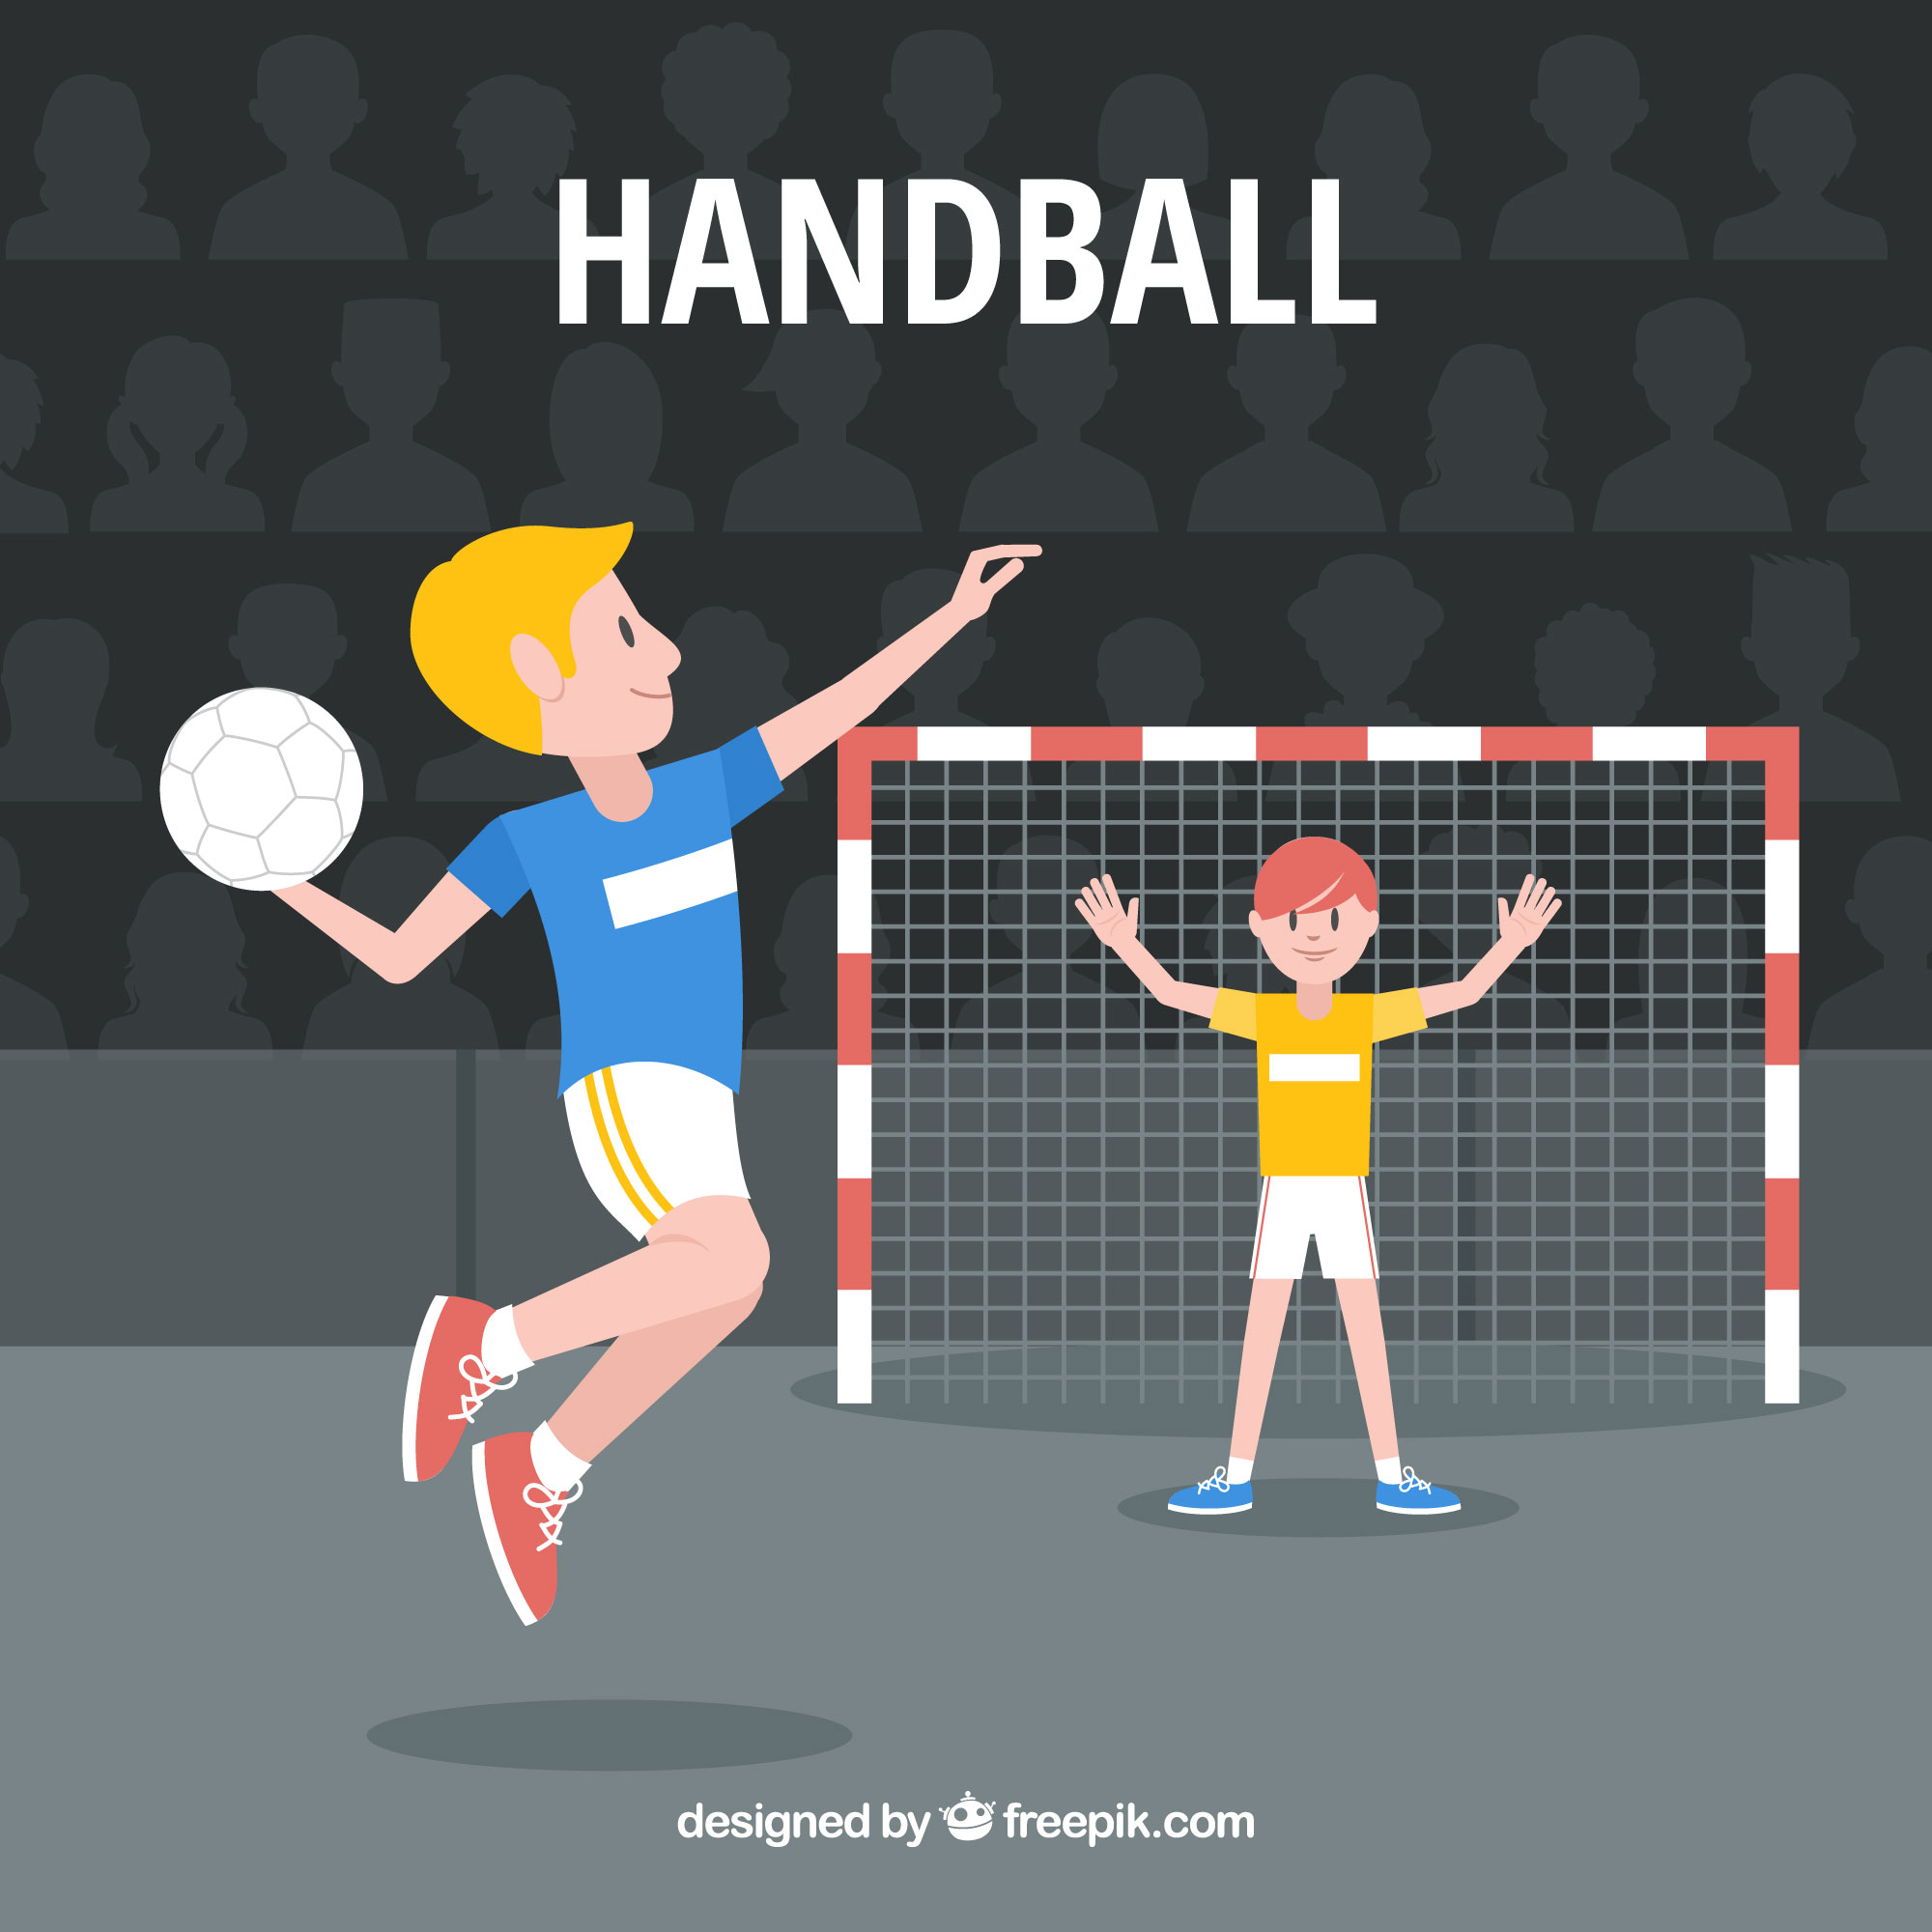 Handball à Bernay. Déguisements et tambours : les supporters